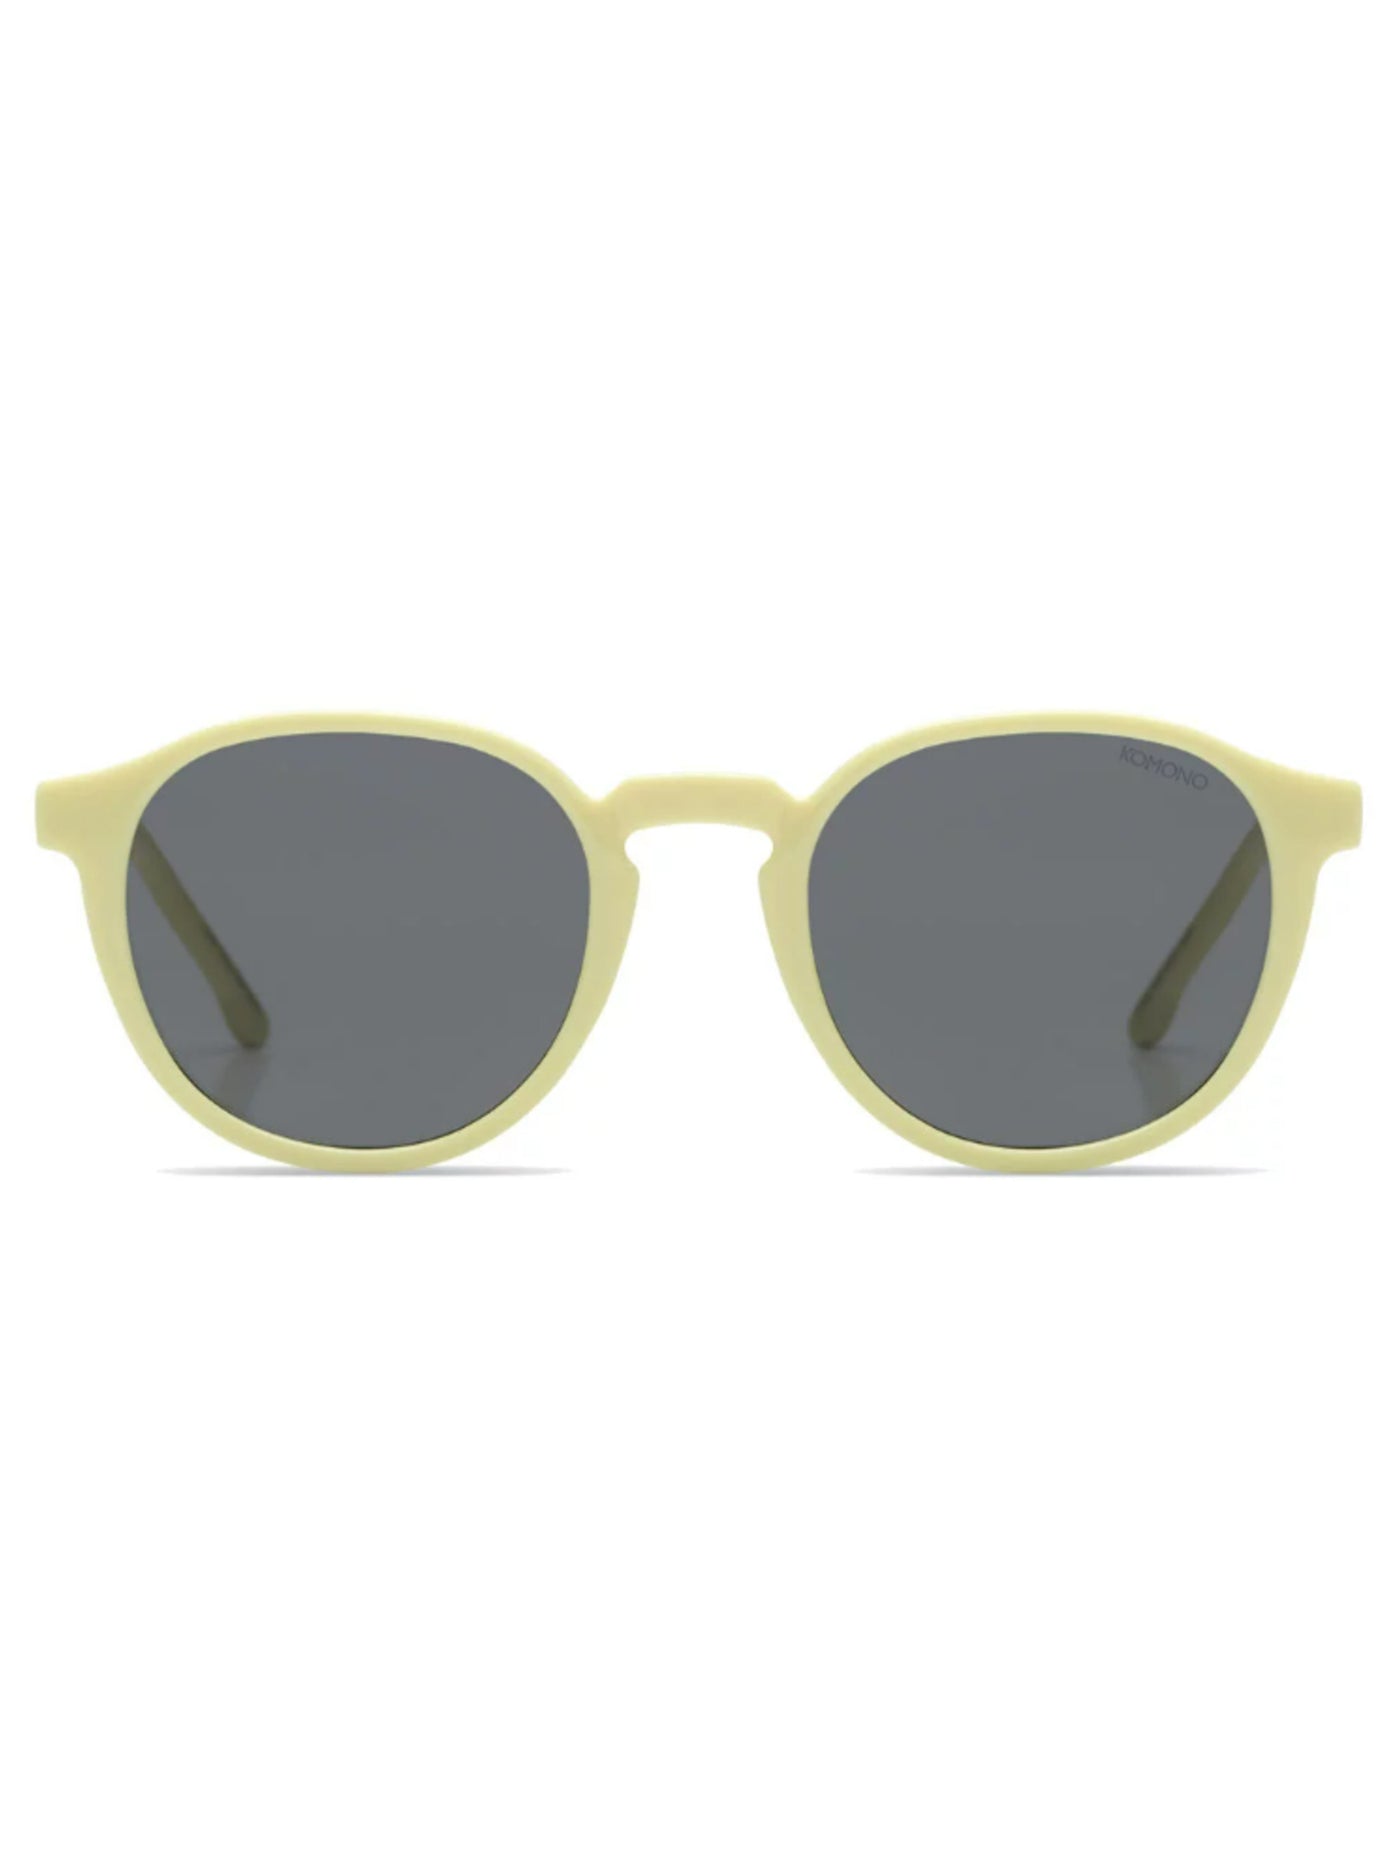 Liam Jr Sunglasses - Lasten aurinkolasit